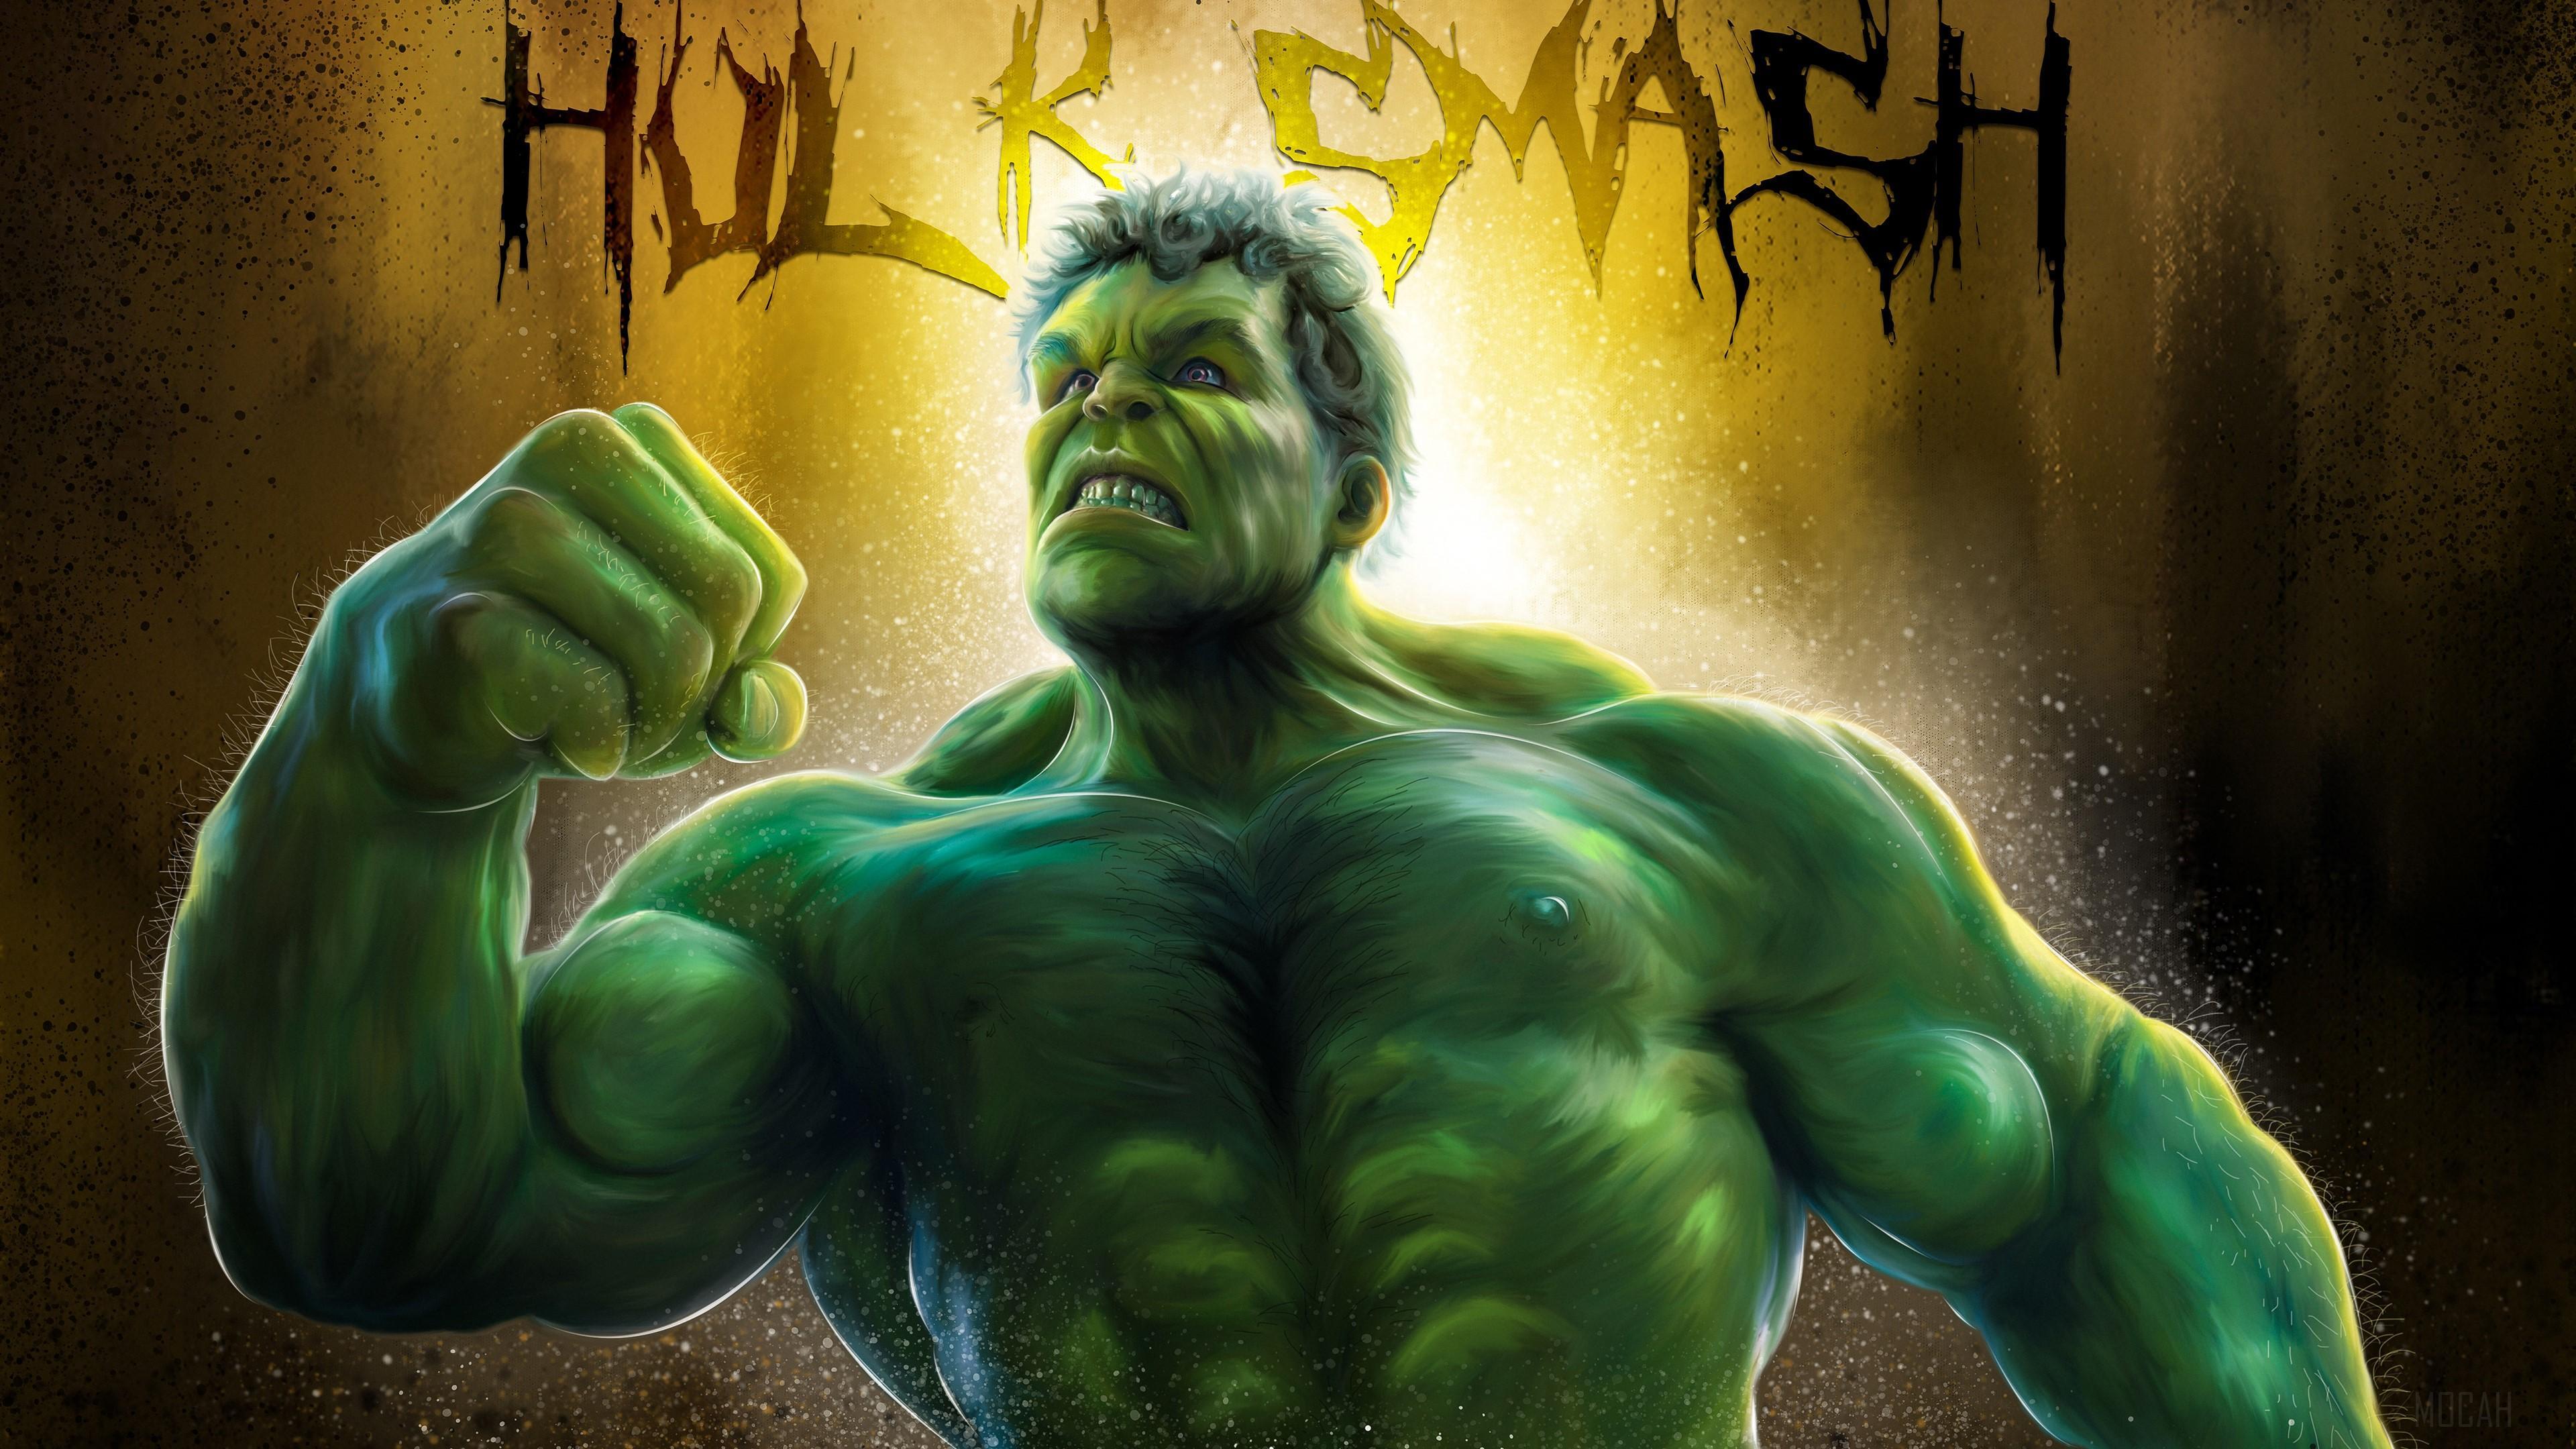 HD wallpaper, Hulk Smash 4K